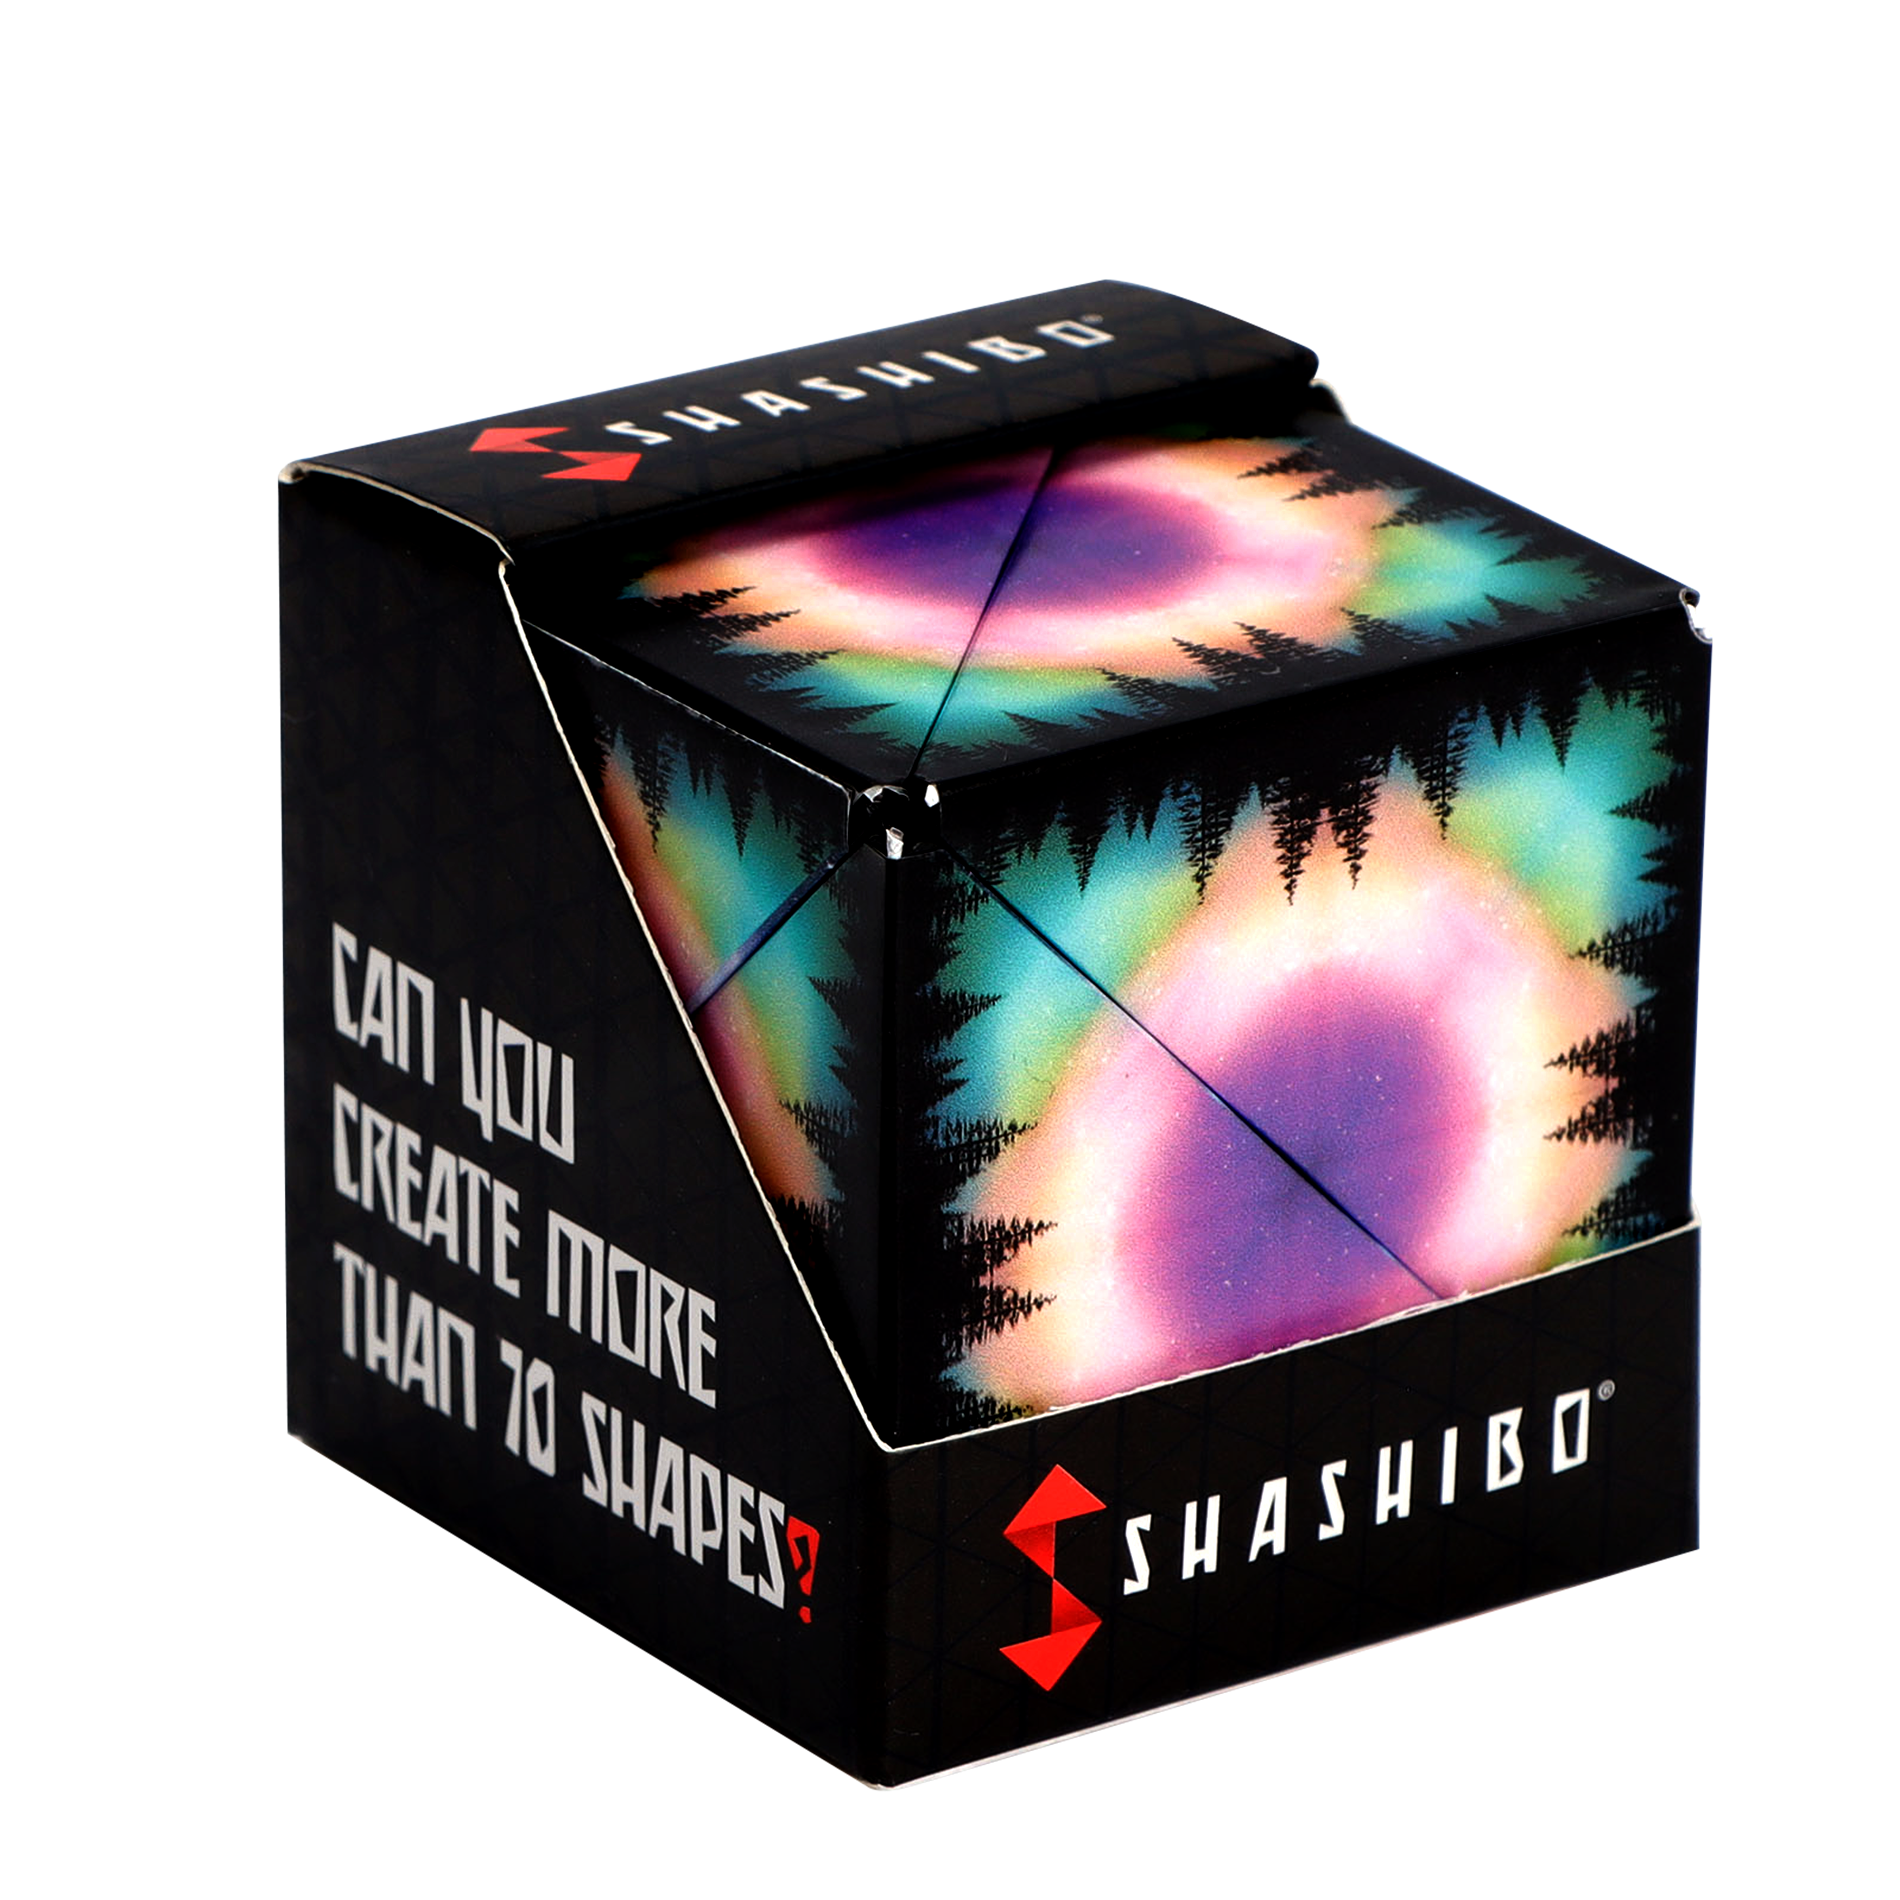 SHASHIBO - The ORIGINAL Shape Shifting Box - Explorer Series